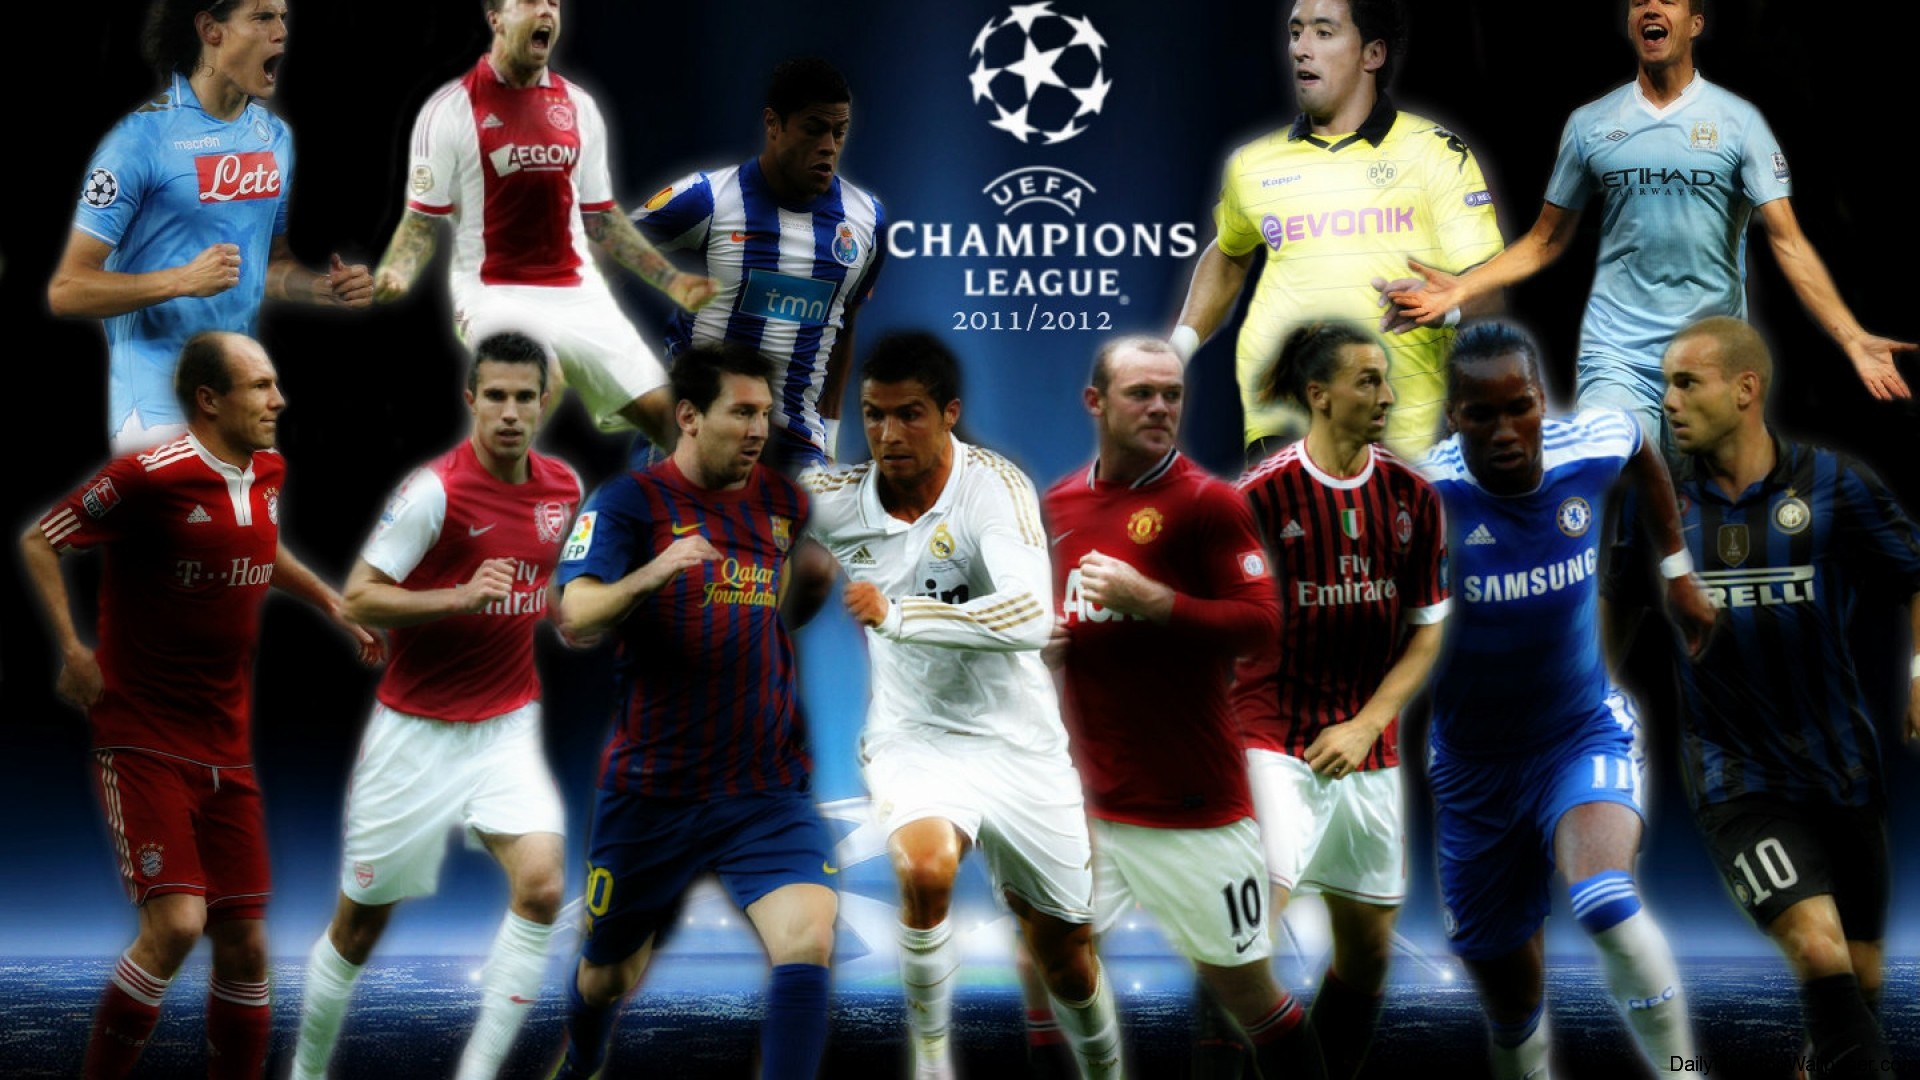 Champions League Wallpaper   HD Wallpapers